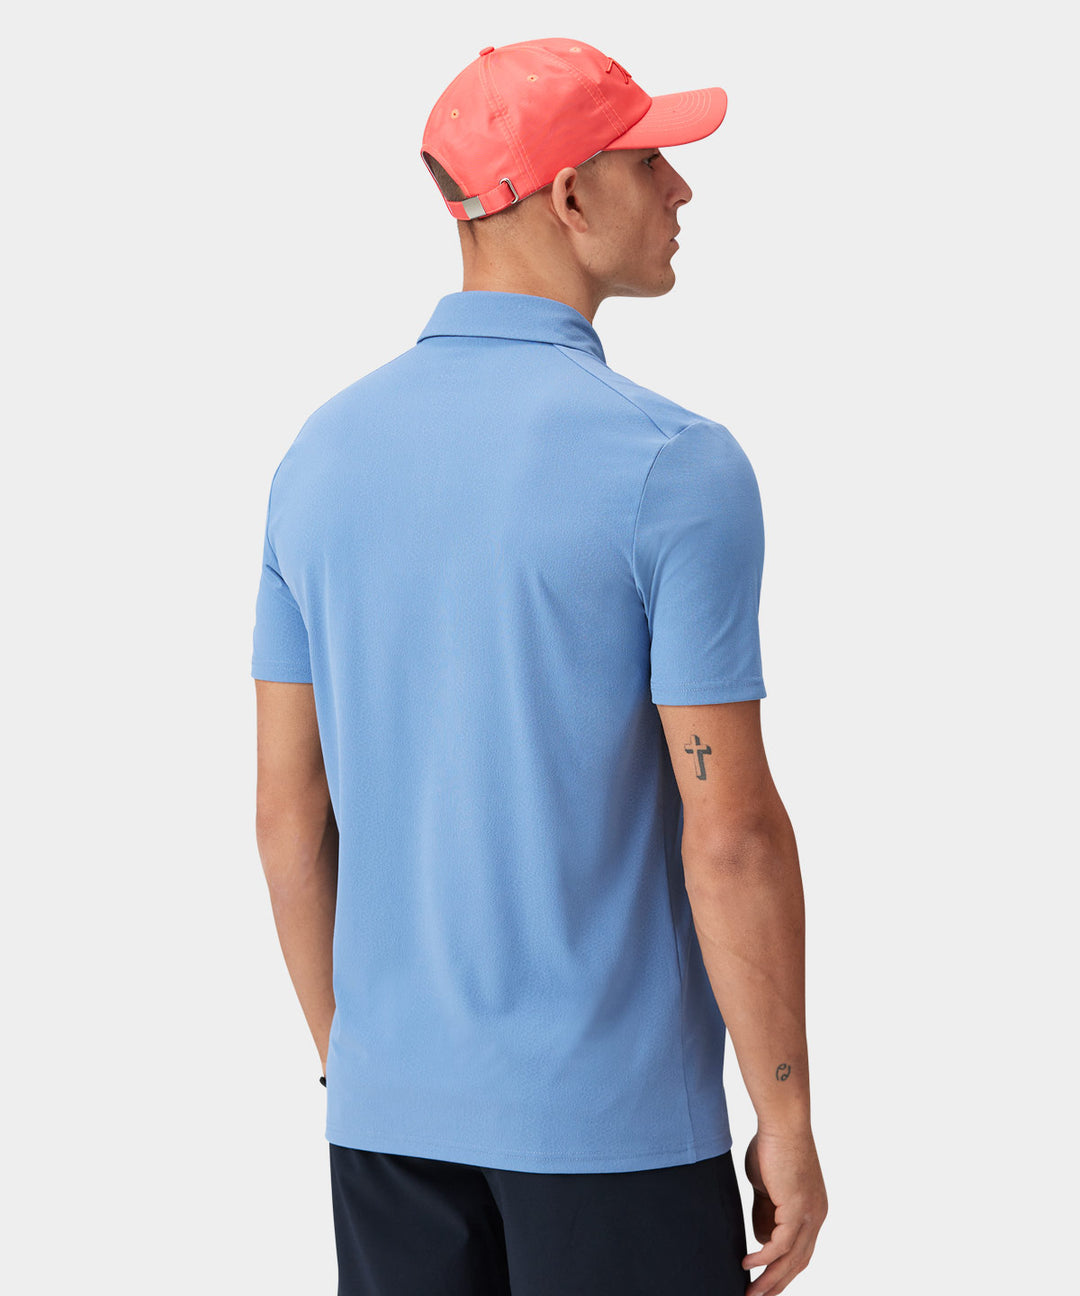 Nevis Slate Performance Shirt Macade Golf